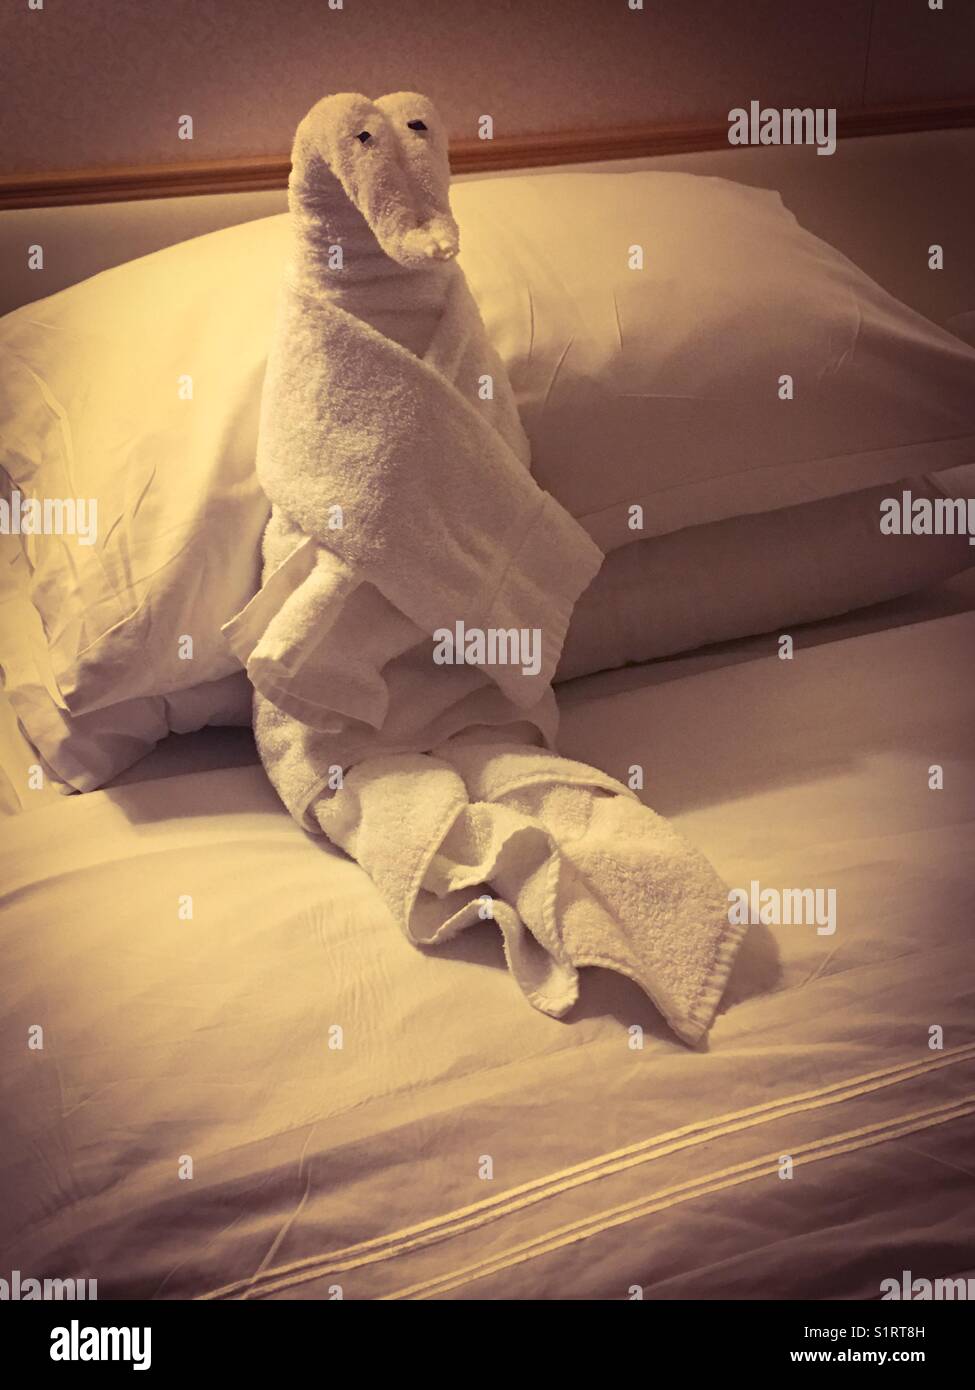 Animales de toalla fotografías e imágenes de alta resolución - Alamy